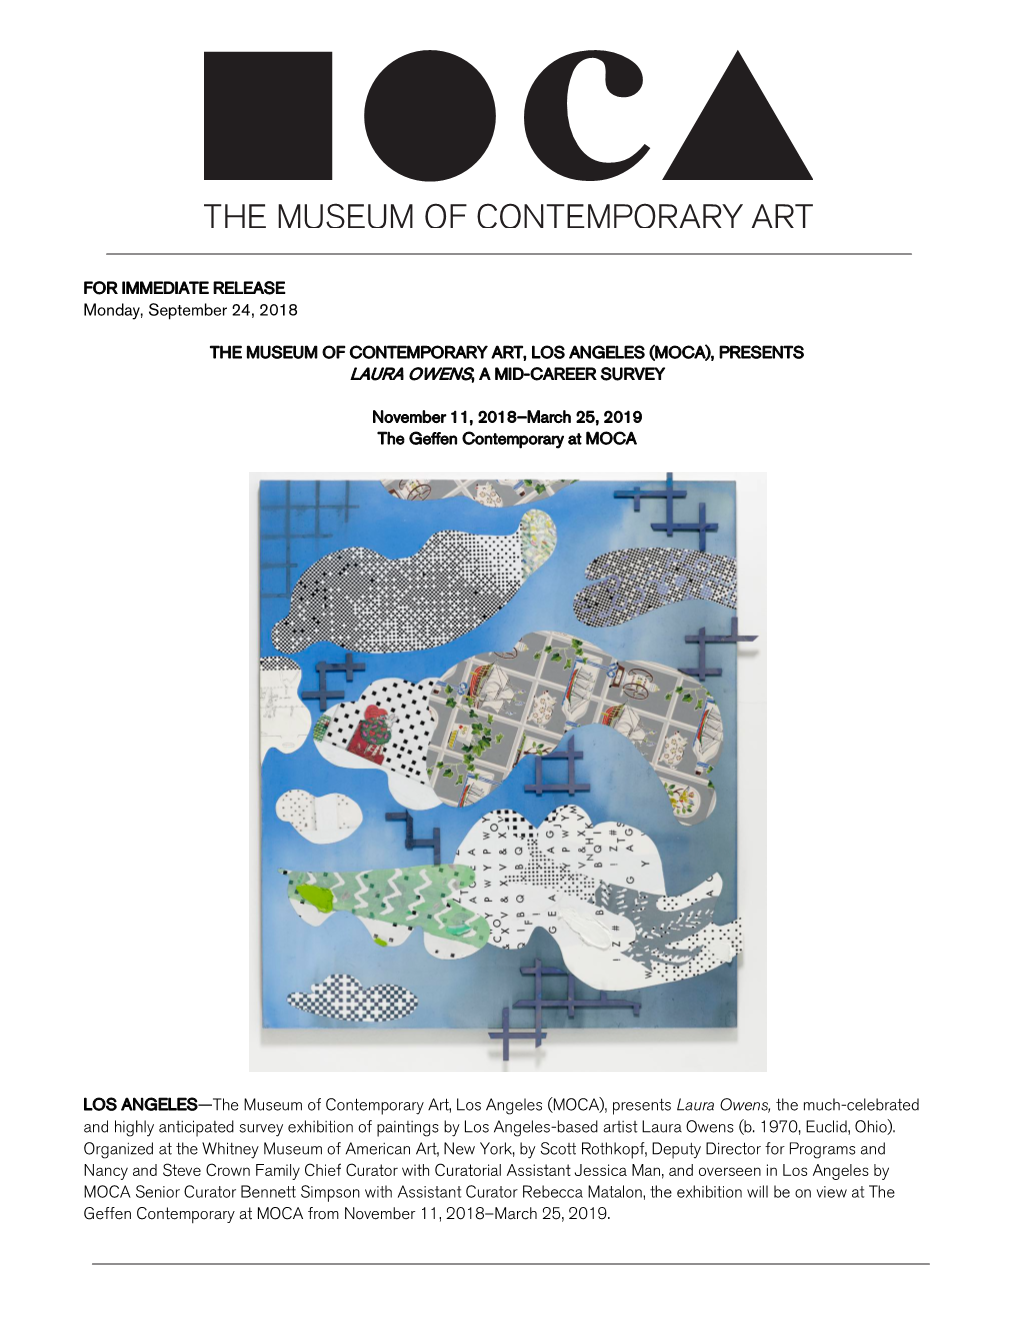 The Museum of Contemporary Art, Los Angeles (Moca), Presents Laura Owens, a Mid-Career Survey